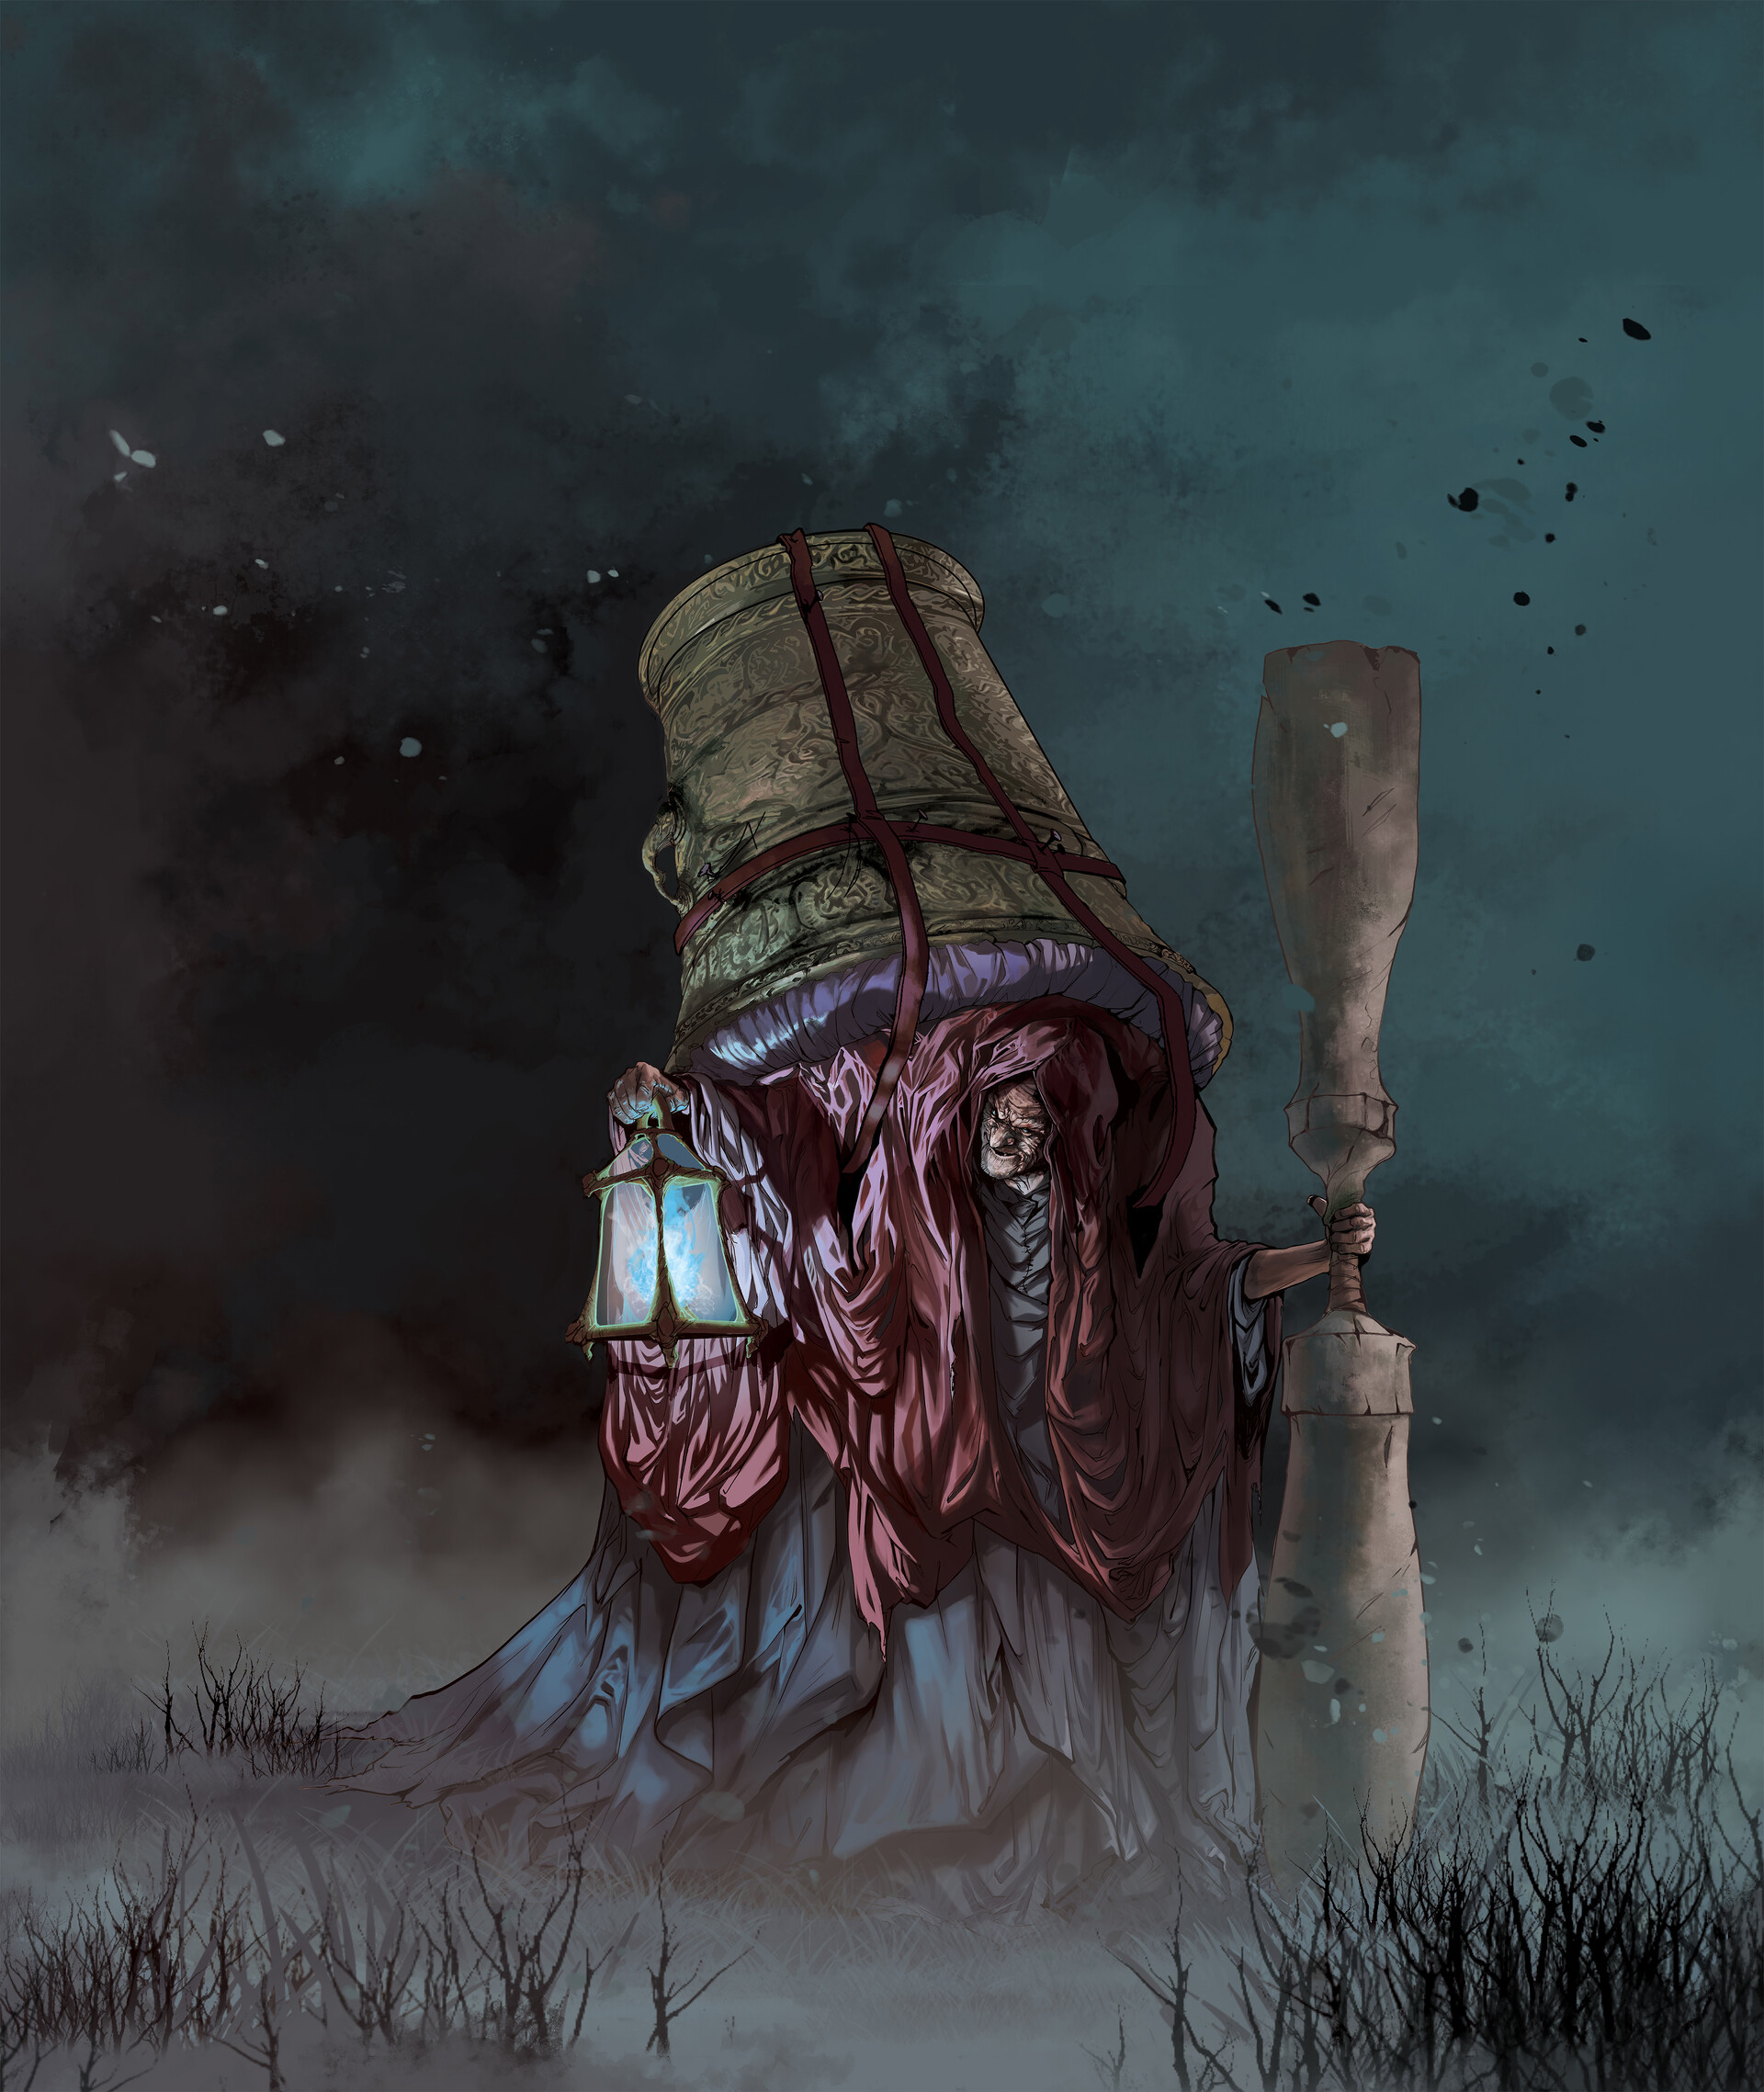 047 - [Concurso NPC] Monstruosos, Estranhos e Assustadores Alessio-greco-baba-illustration-one-page